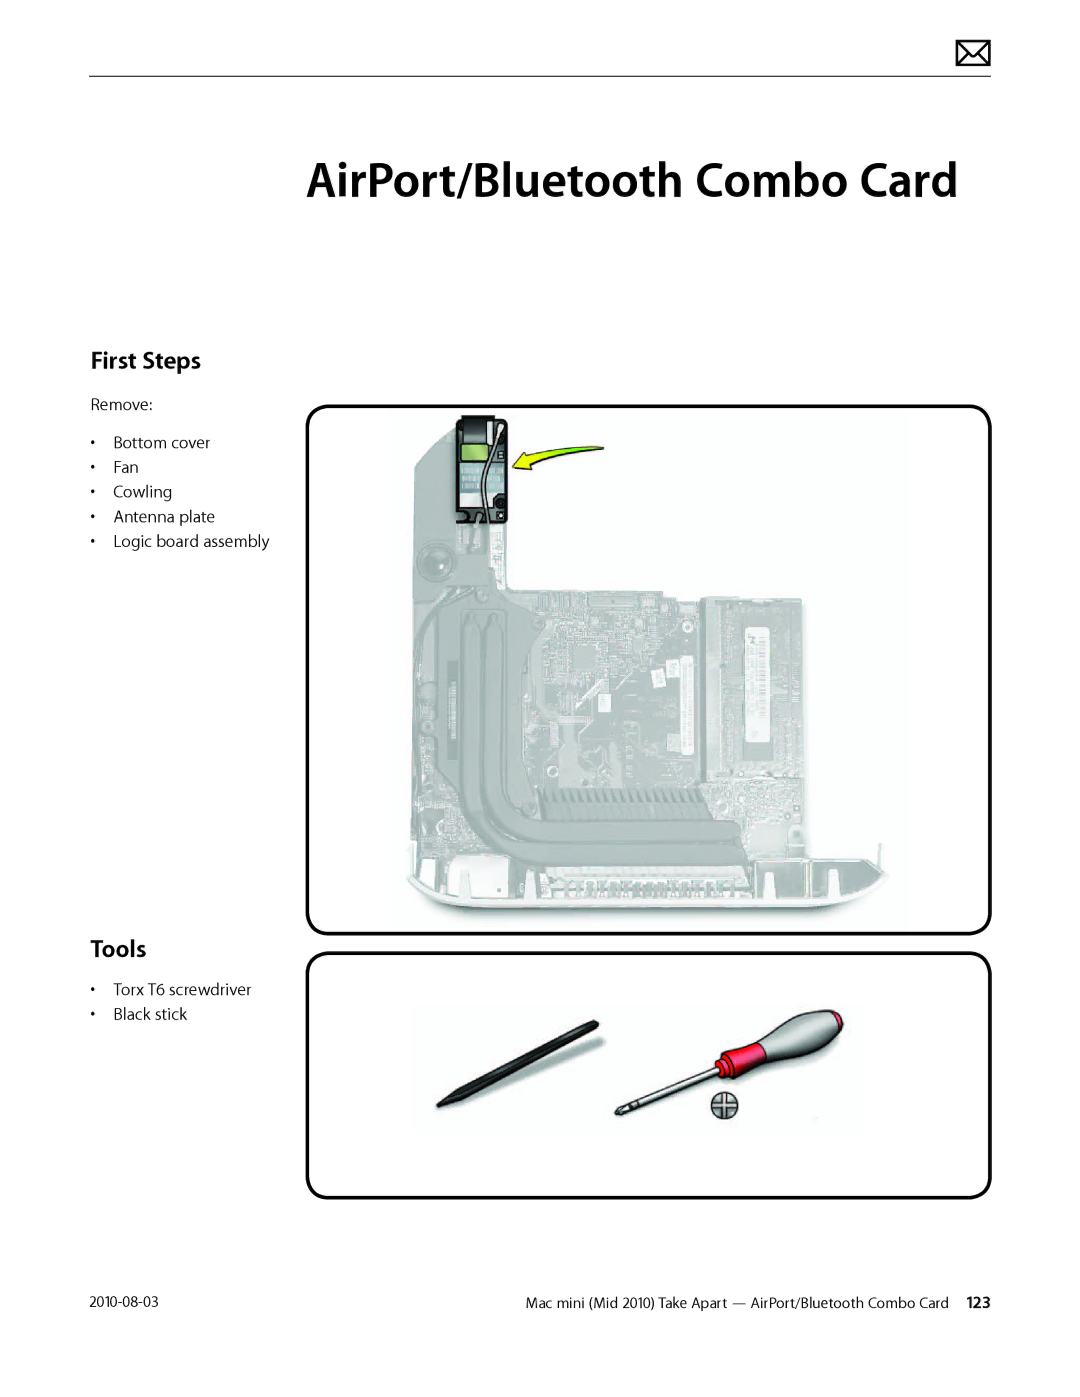 Apple Mac mini manual AirPort/Bluetooth Combo Card, First Steps 